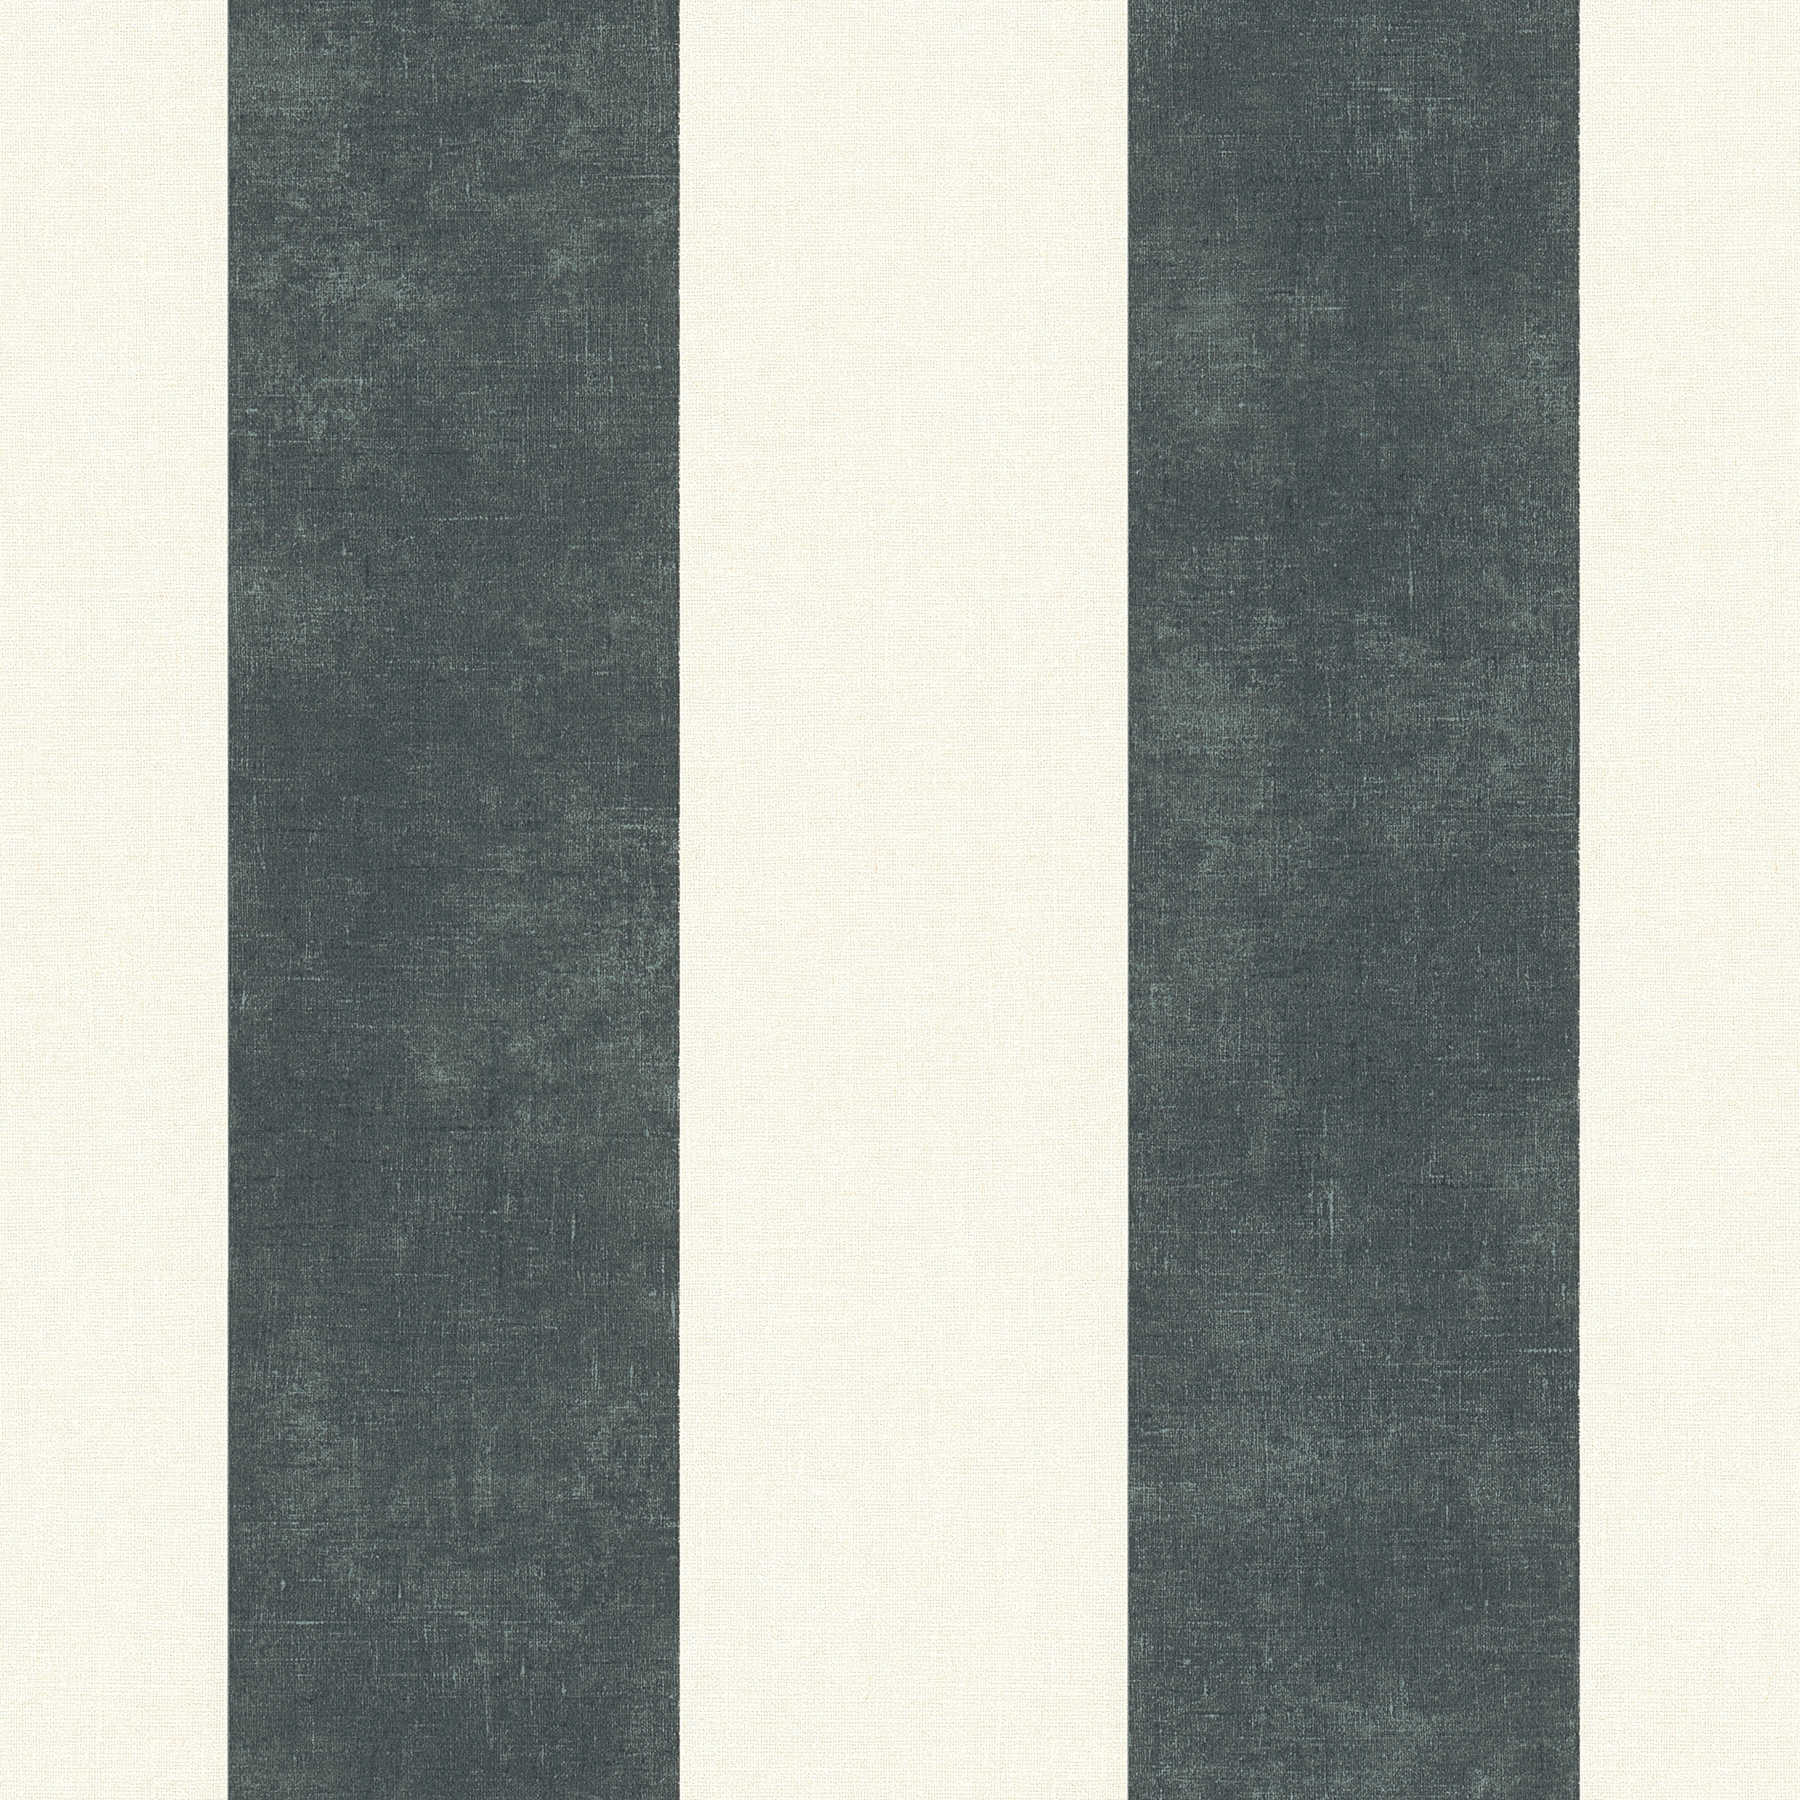 Black and white non-woven wallpaper block stripes pattern
